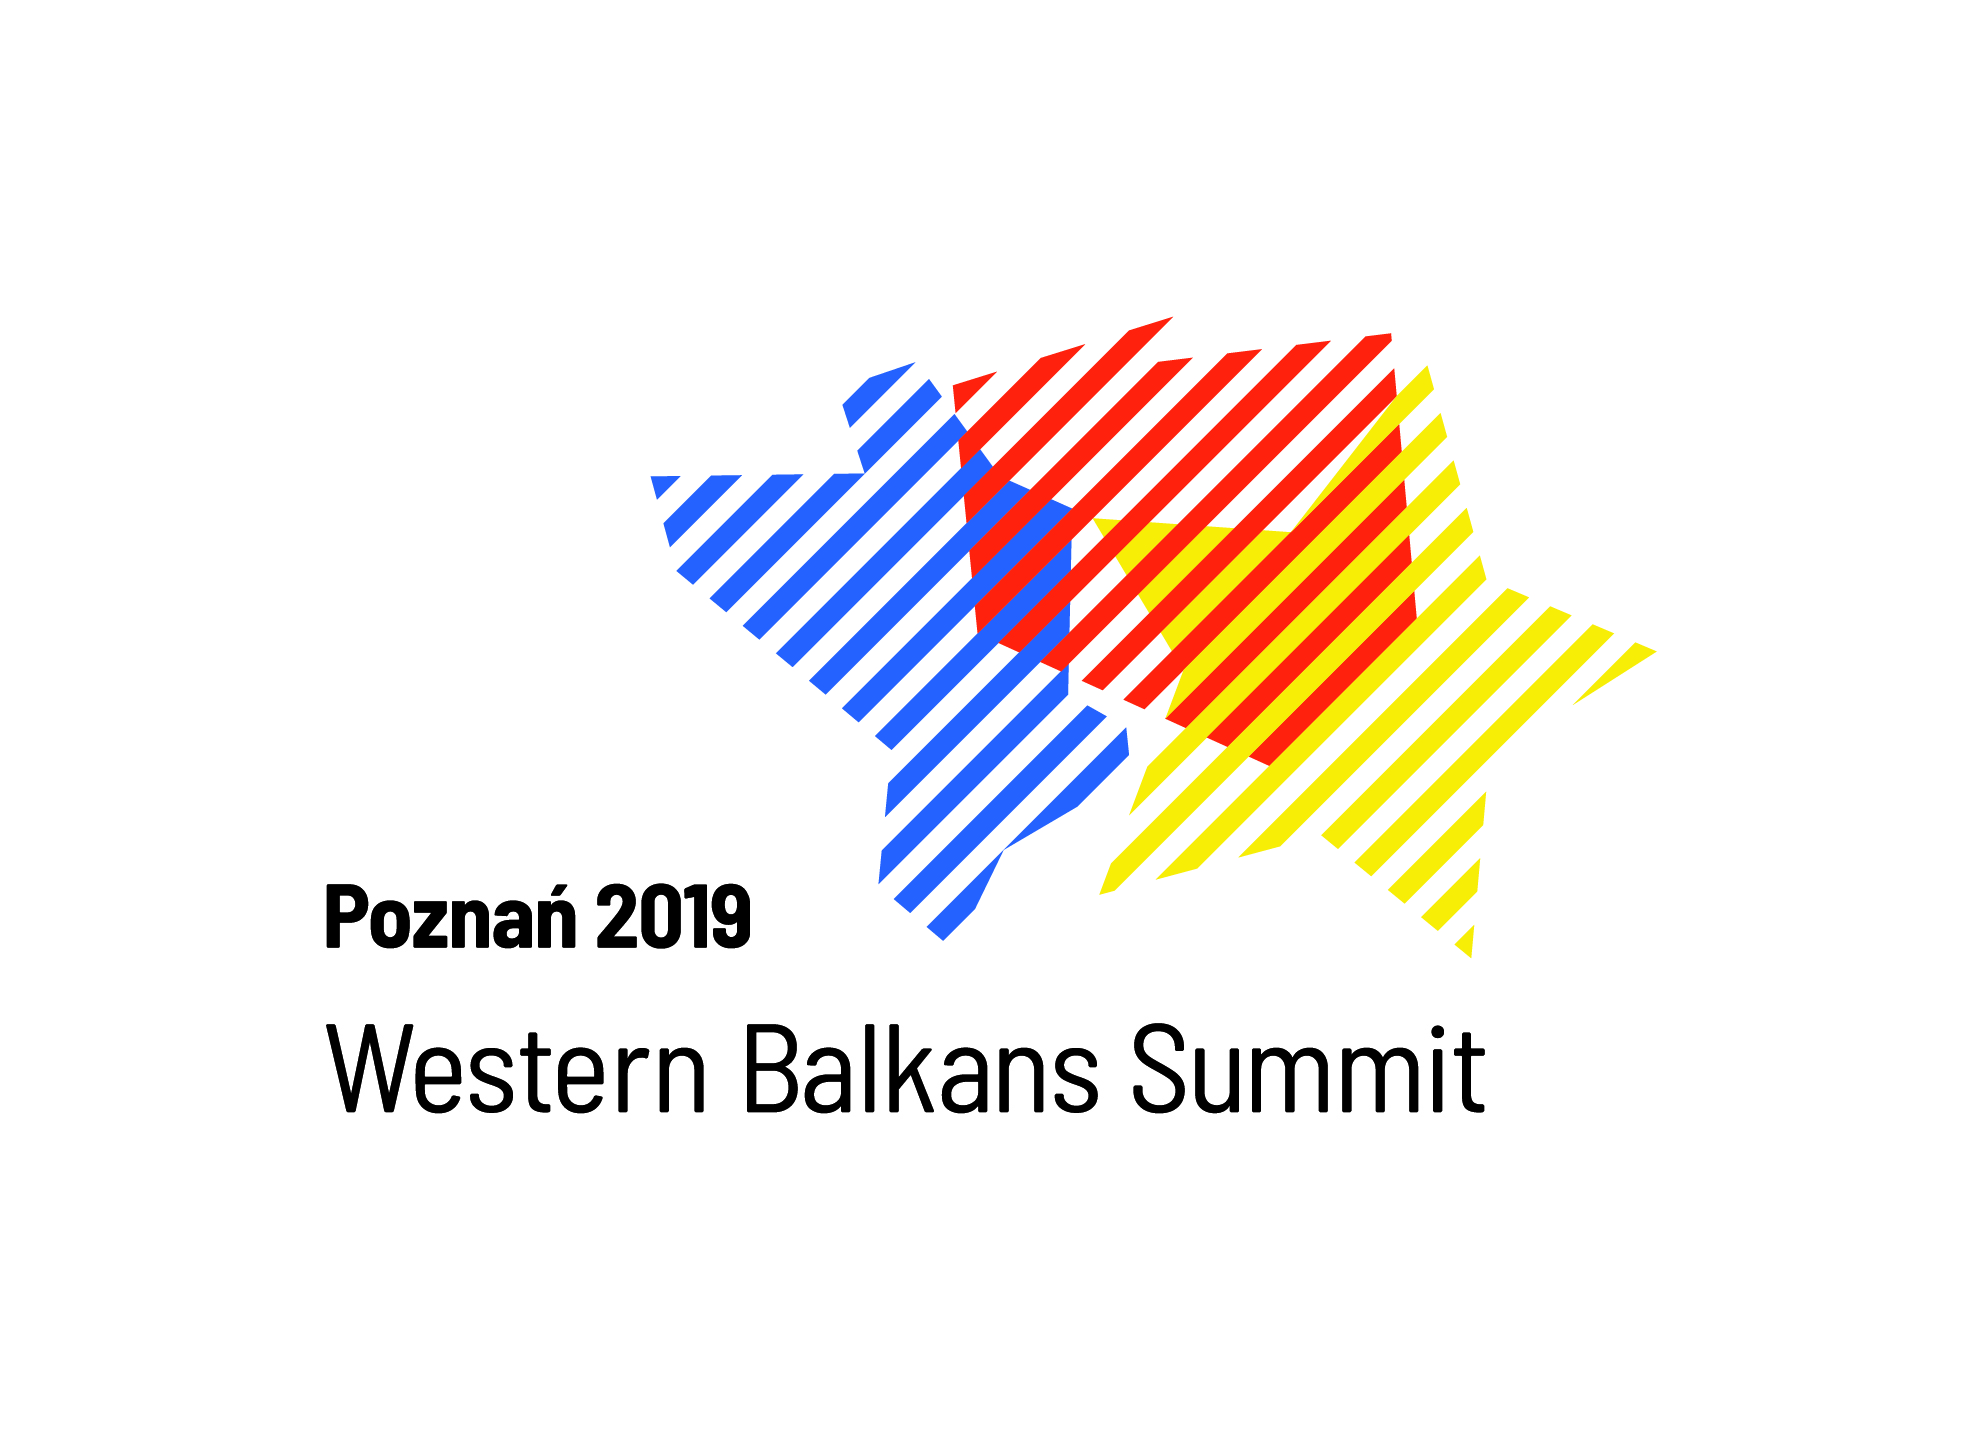 Western Balkans and Geopolitics